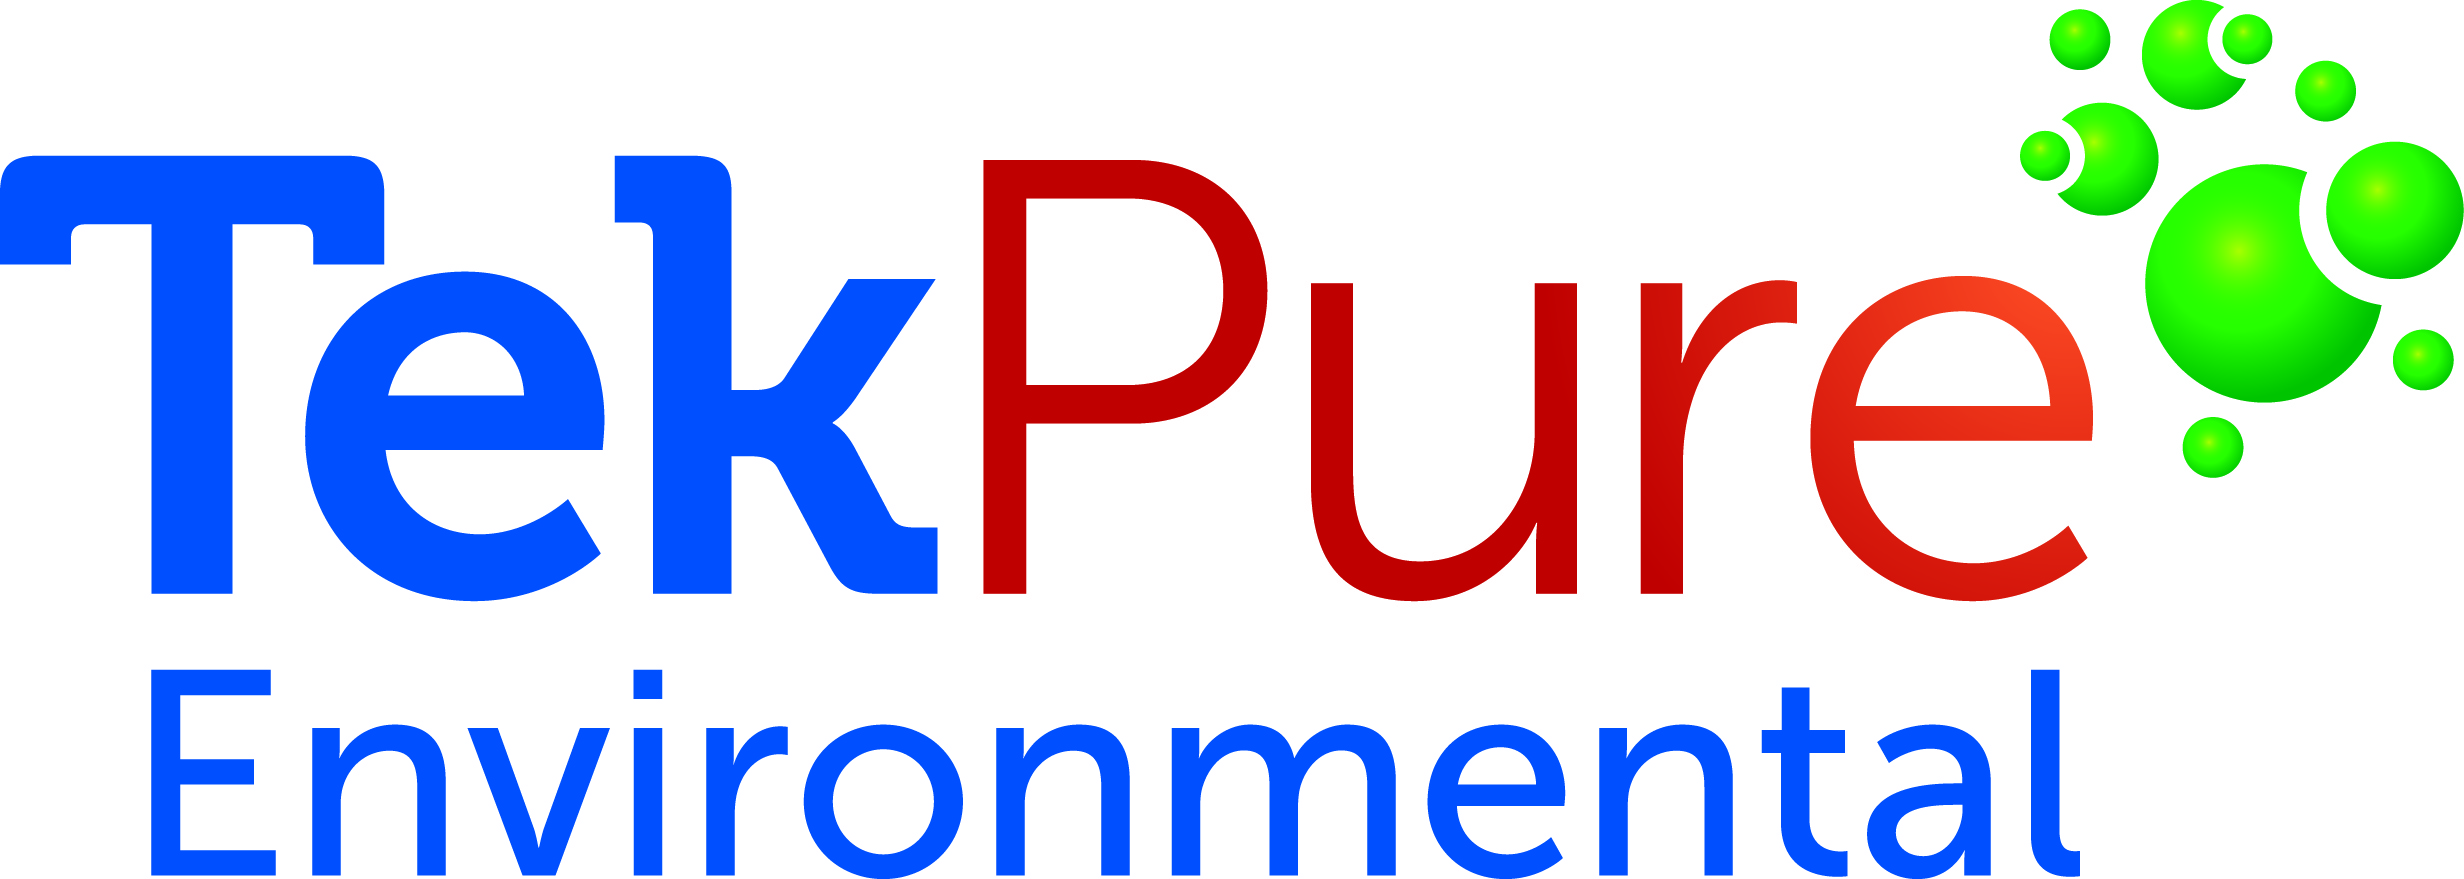 TekPure Environmental, LLC Logo